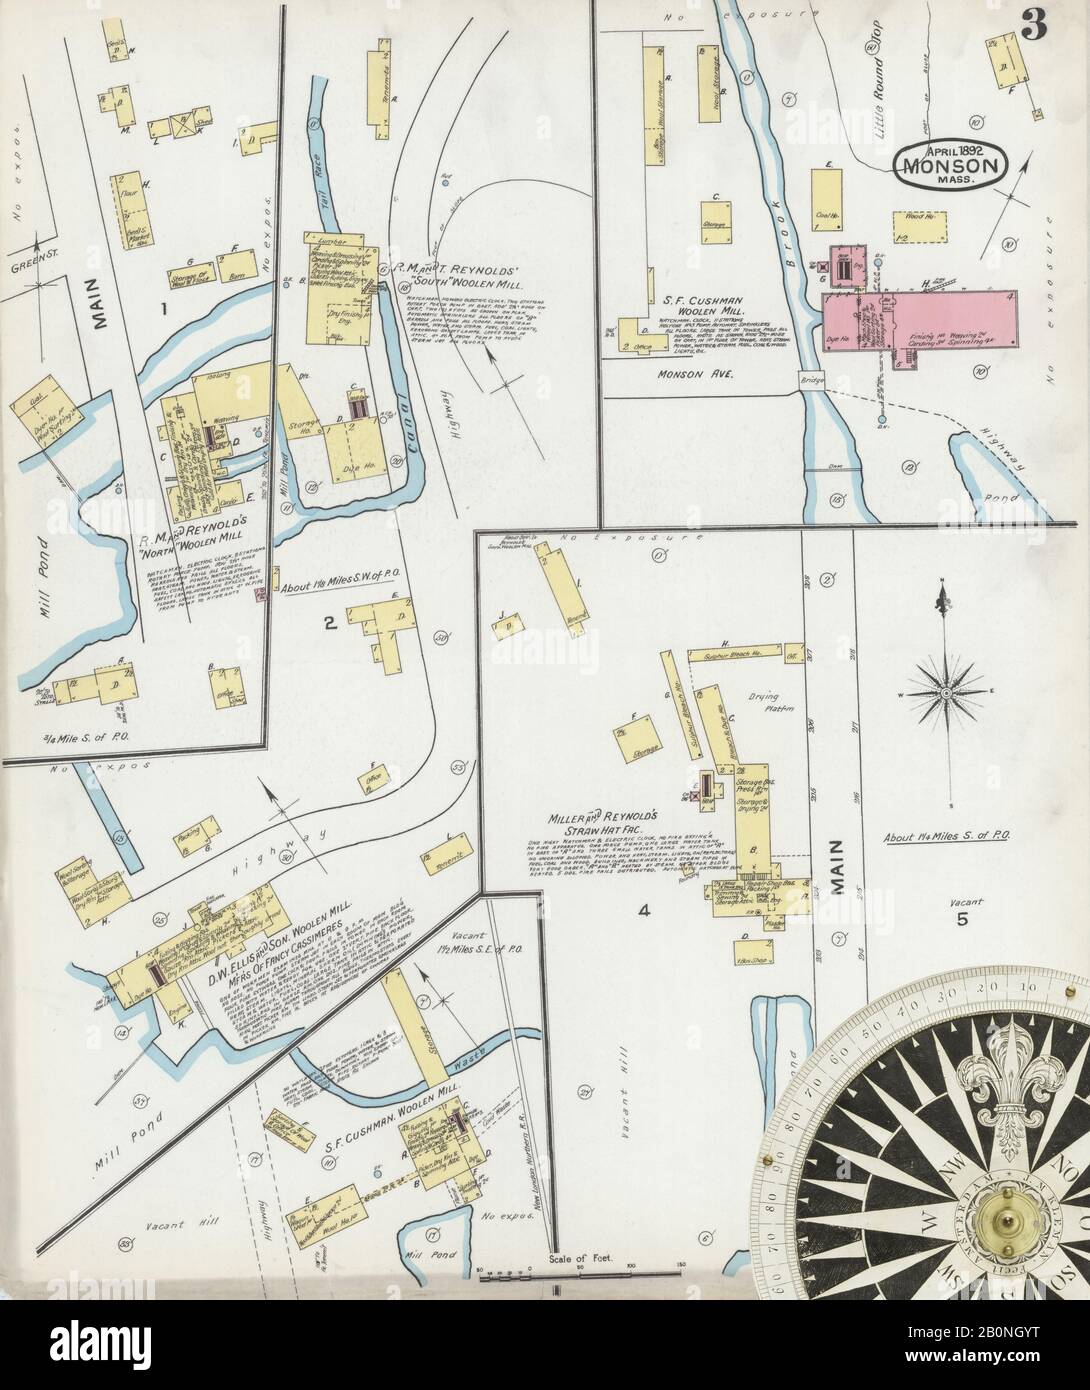 Bild 3 von Sanborn Fire Insurance Map aus Monson, Hampden County, Massachusetts. Apr. 3 Blatt(e), Amerika, Straßenkarte mit einem Kompass Aus Dem 19. Jahrhundert Stockfoto